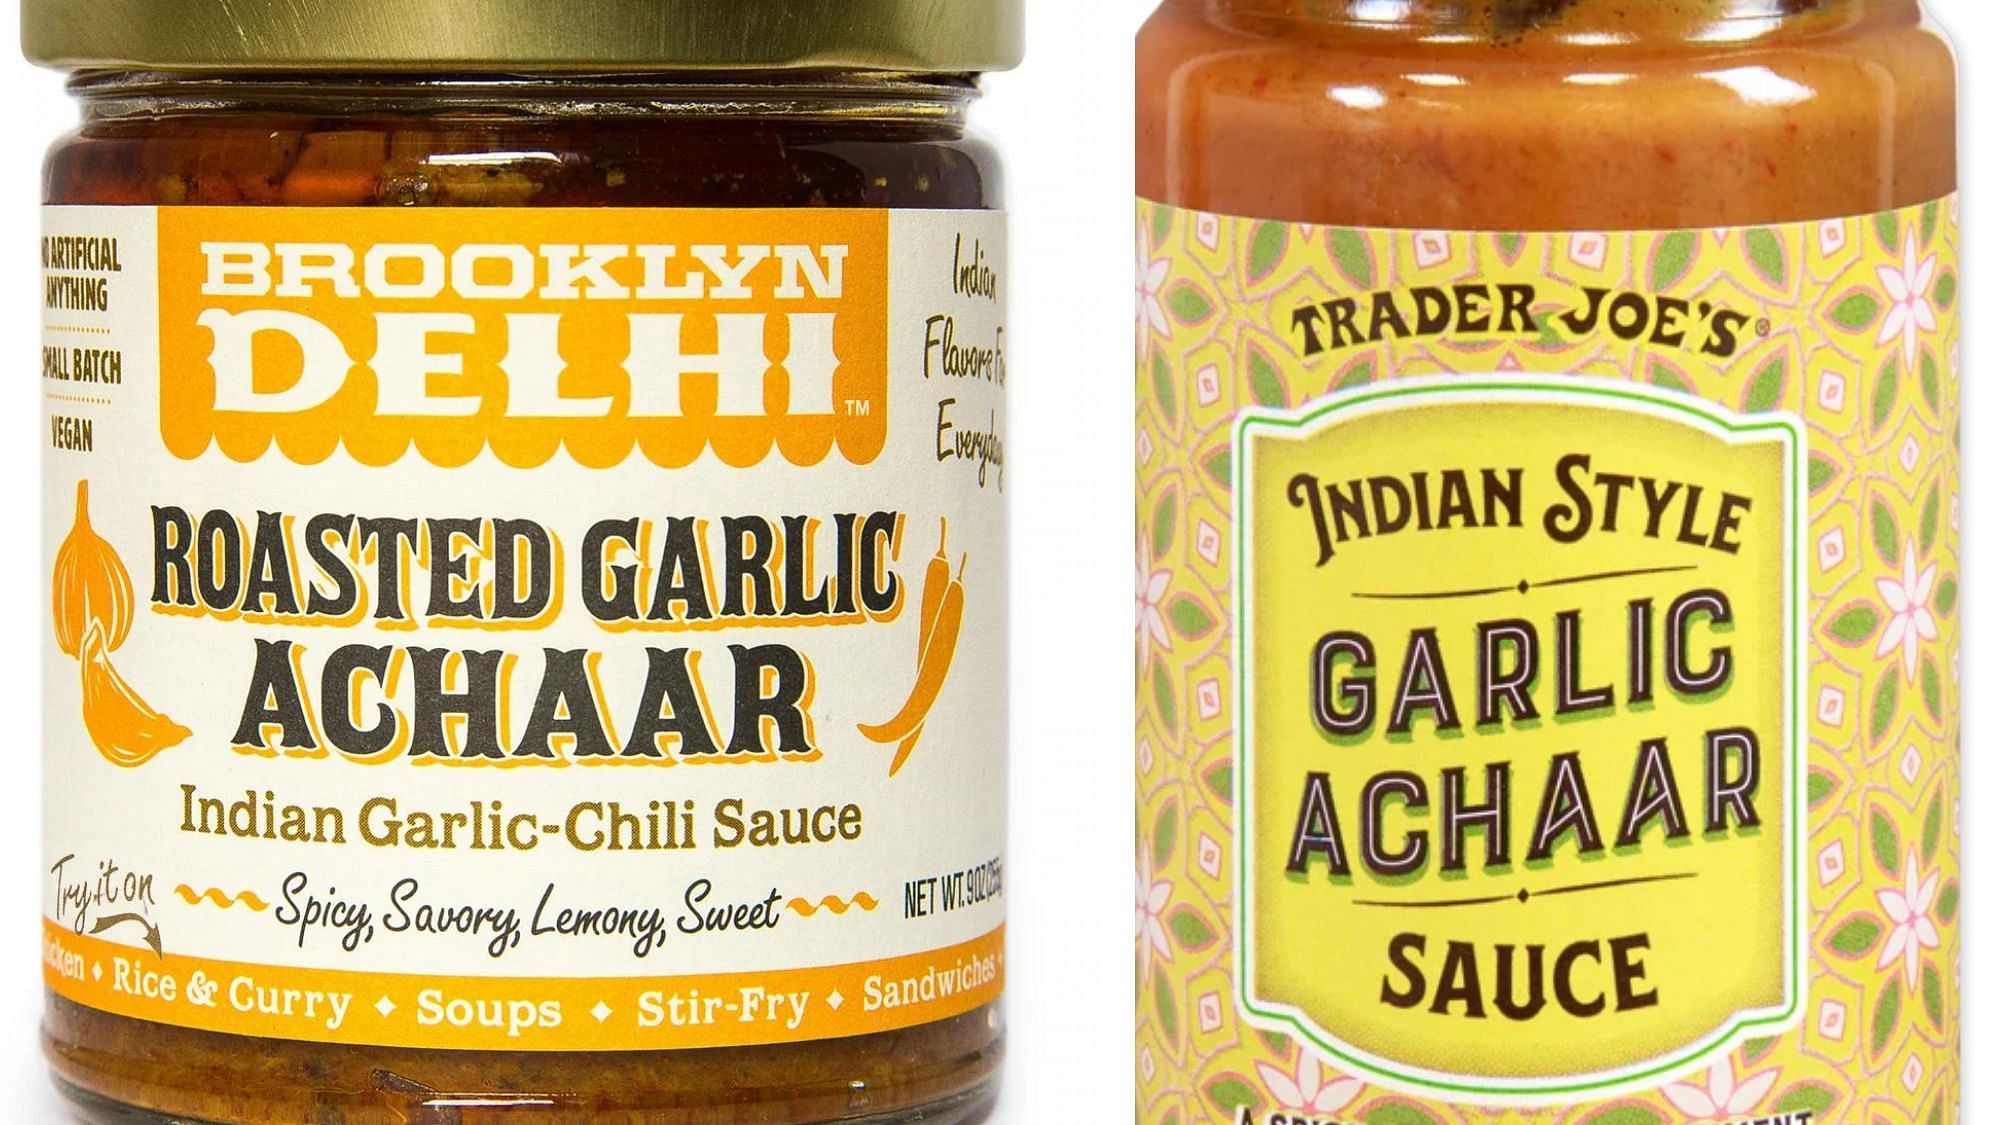 <div class="paragraphs"><p>Brooklyn Delhi's Roasted Garlic Achaar (left) and Trader Joe's Indian Style Garlic Achaar Sauce.</p></div>